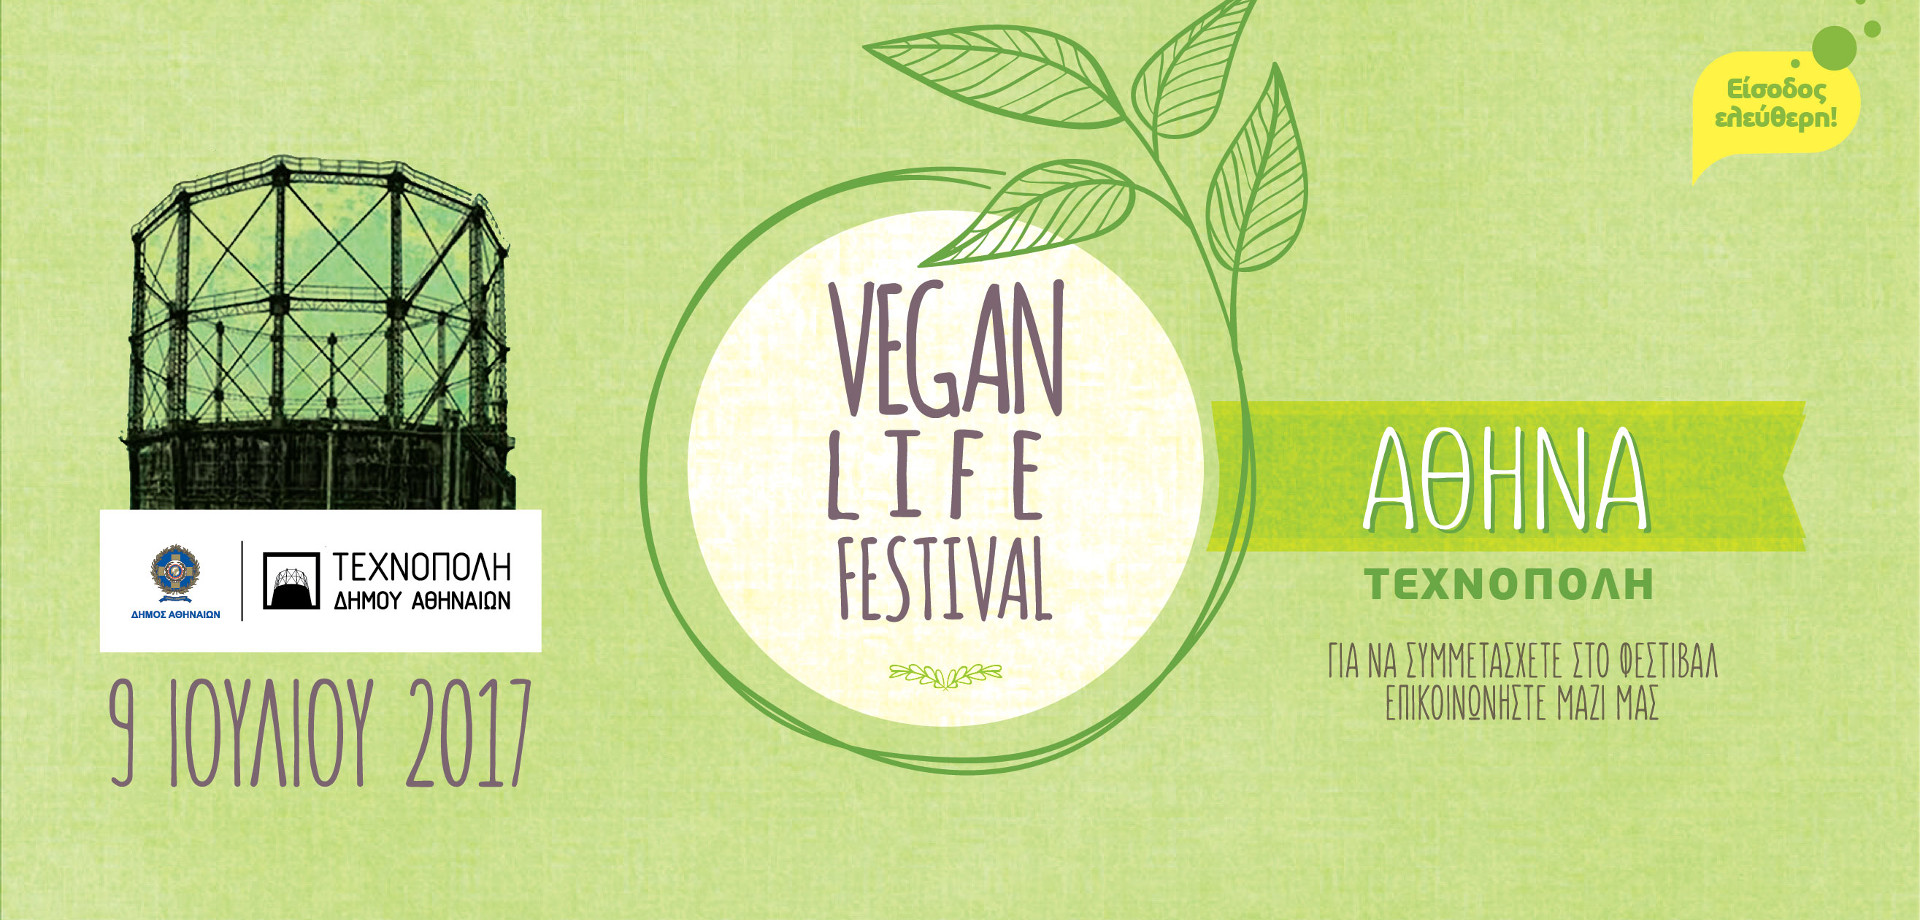 Vegan Life Festival Athens 2017